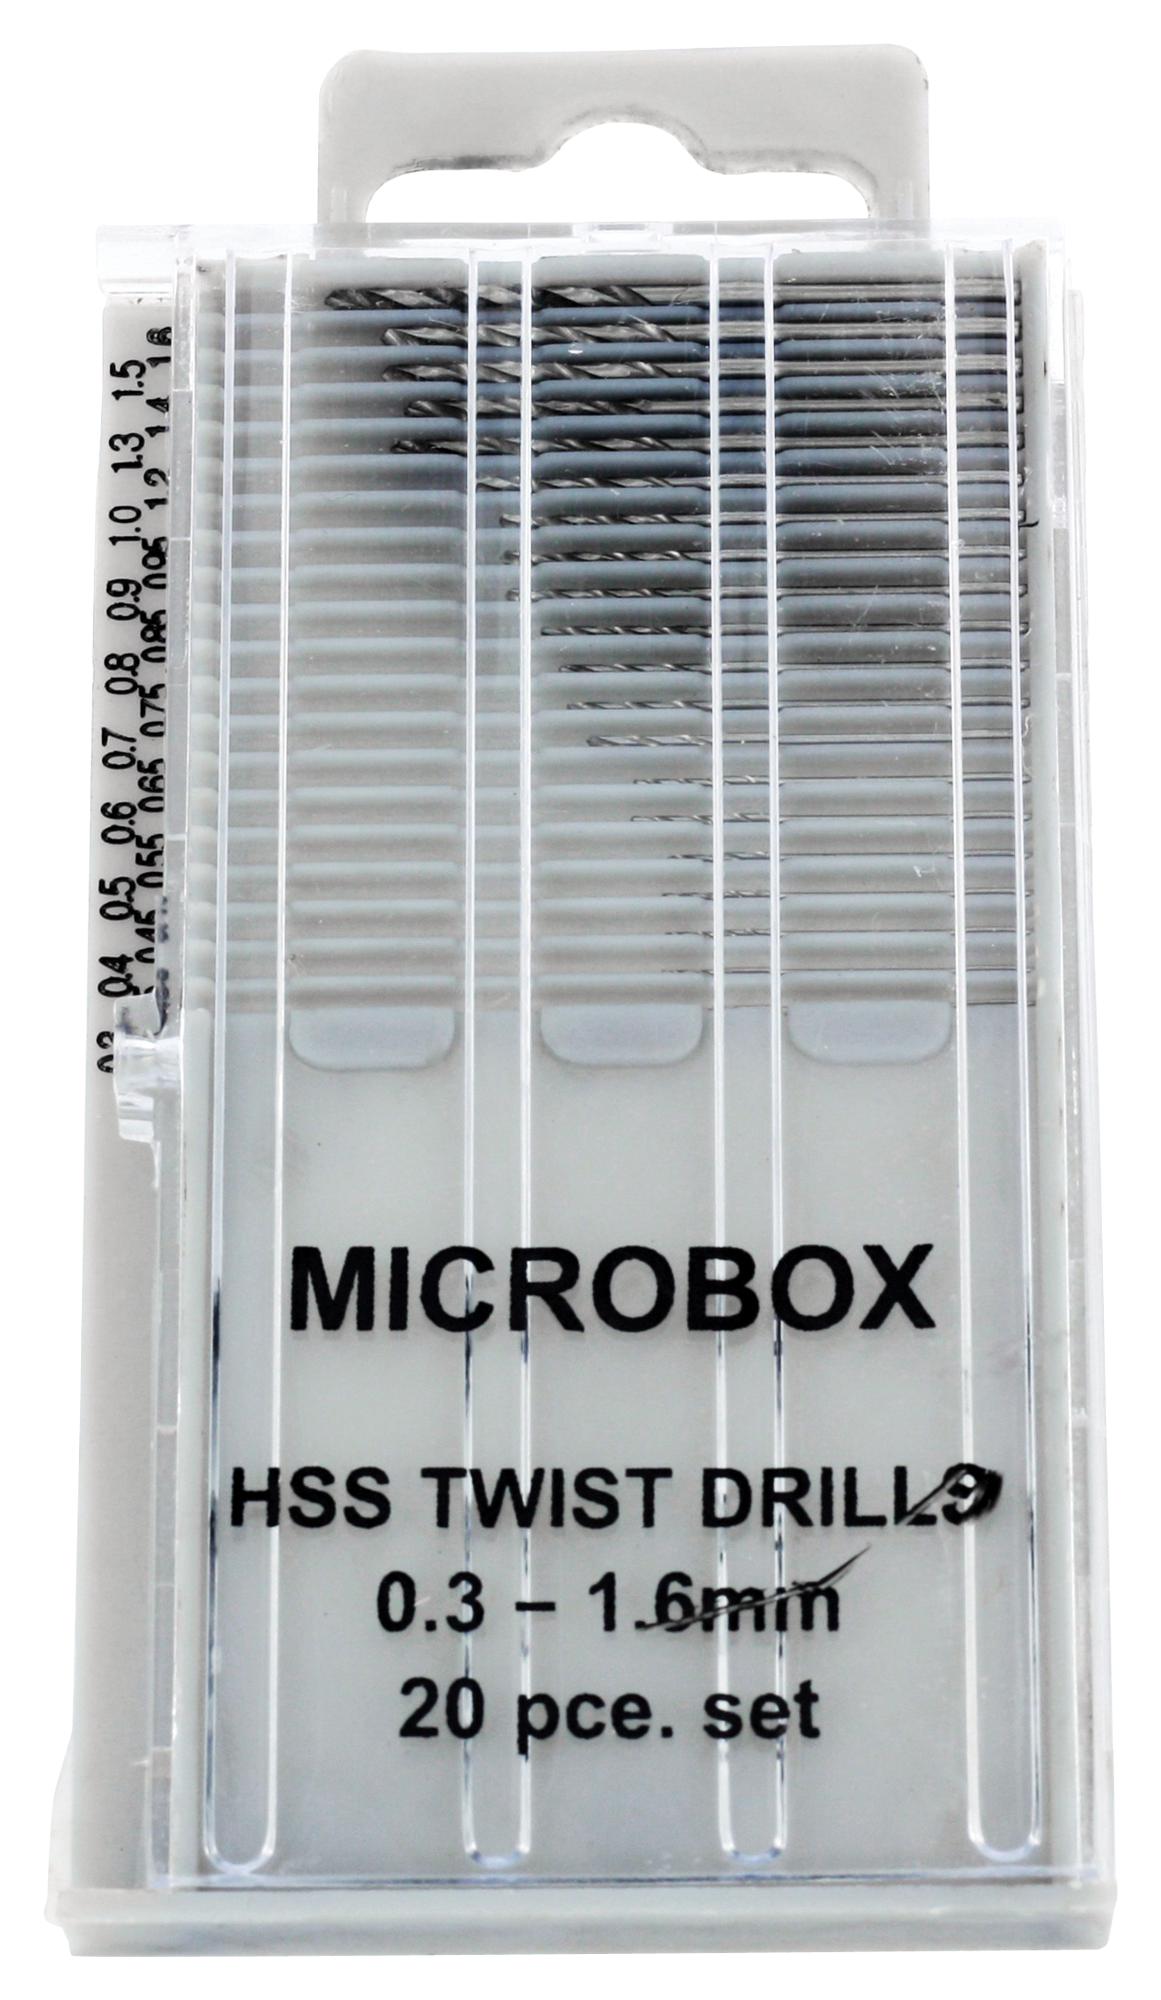 MP002109 MICROBOX DRILL BIT SET, 20PC, 0.3-1.6MM MULTICOMP PRO